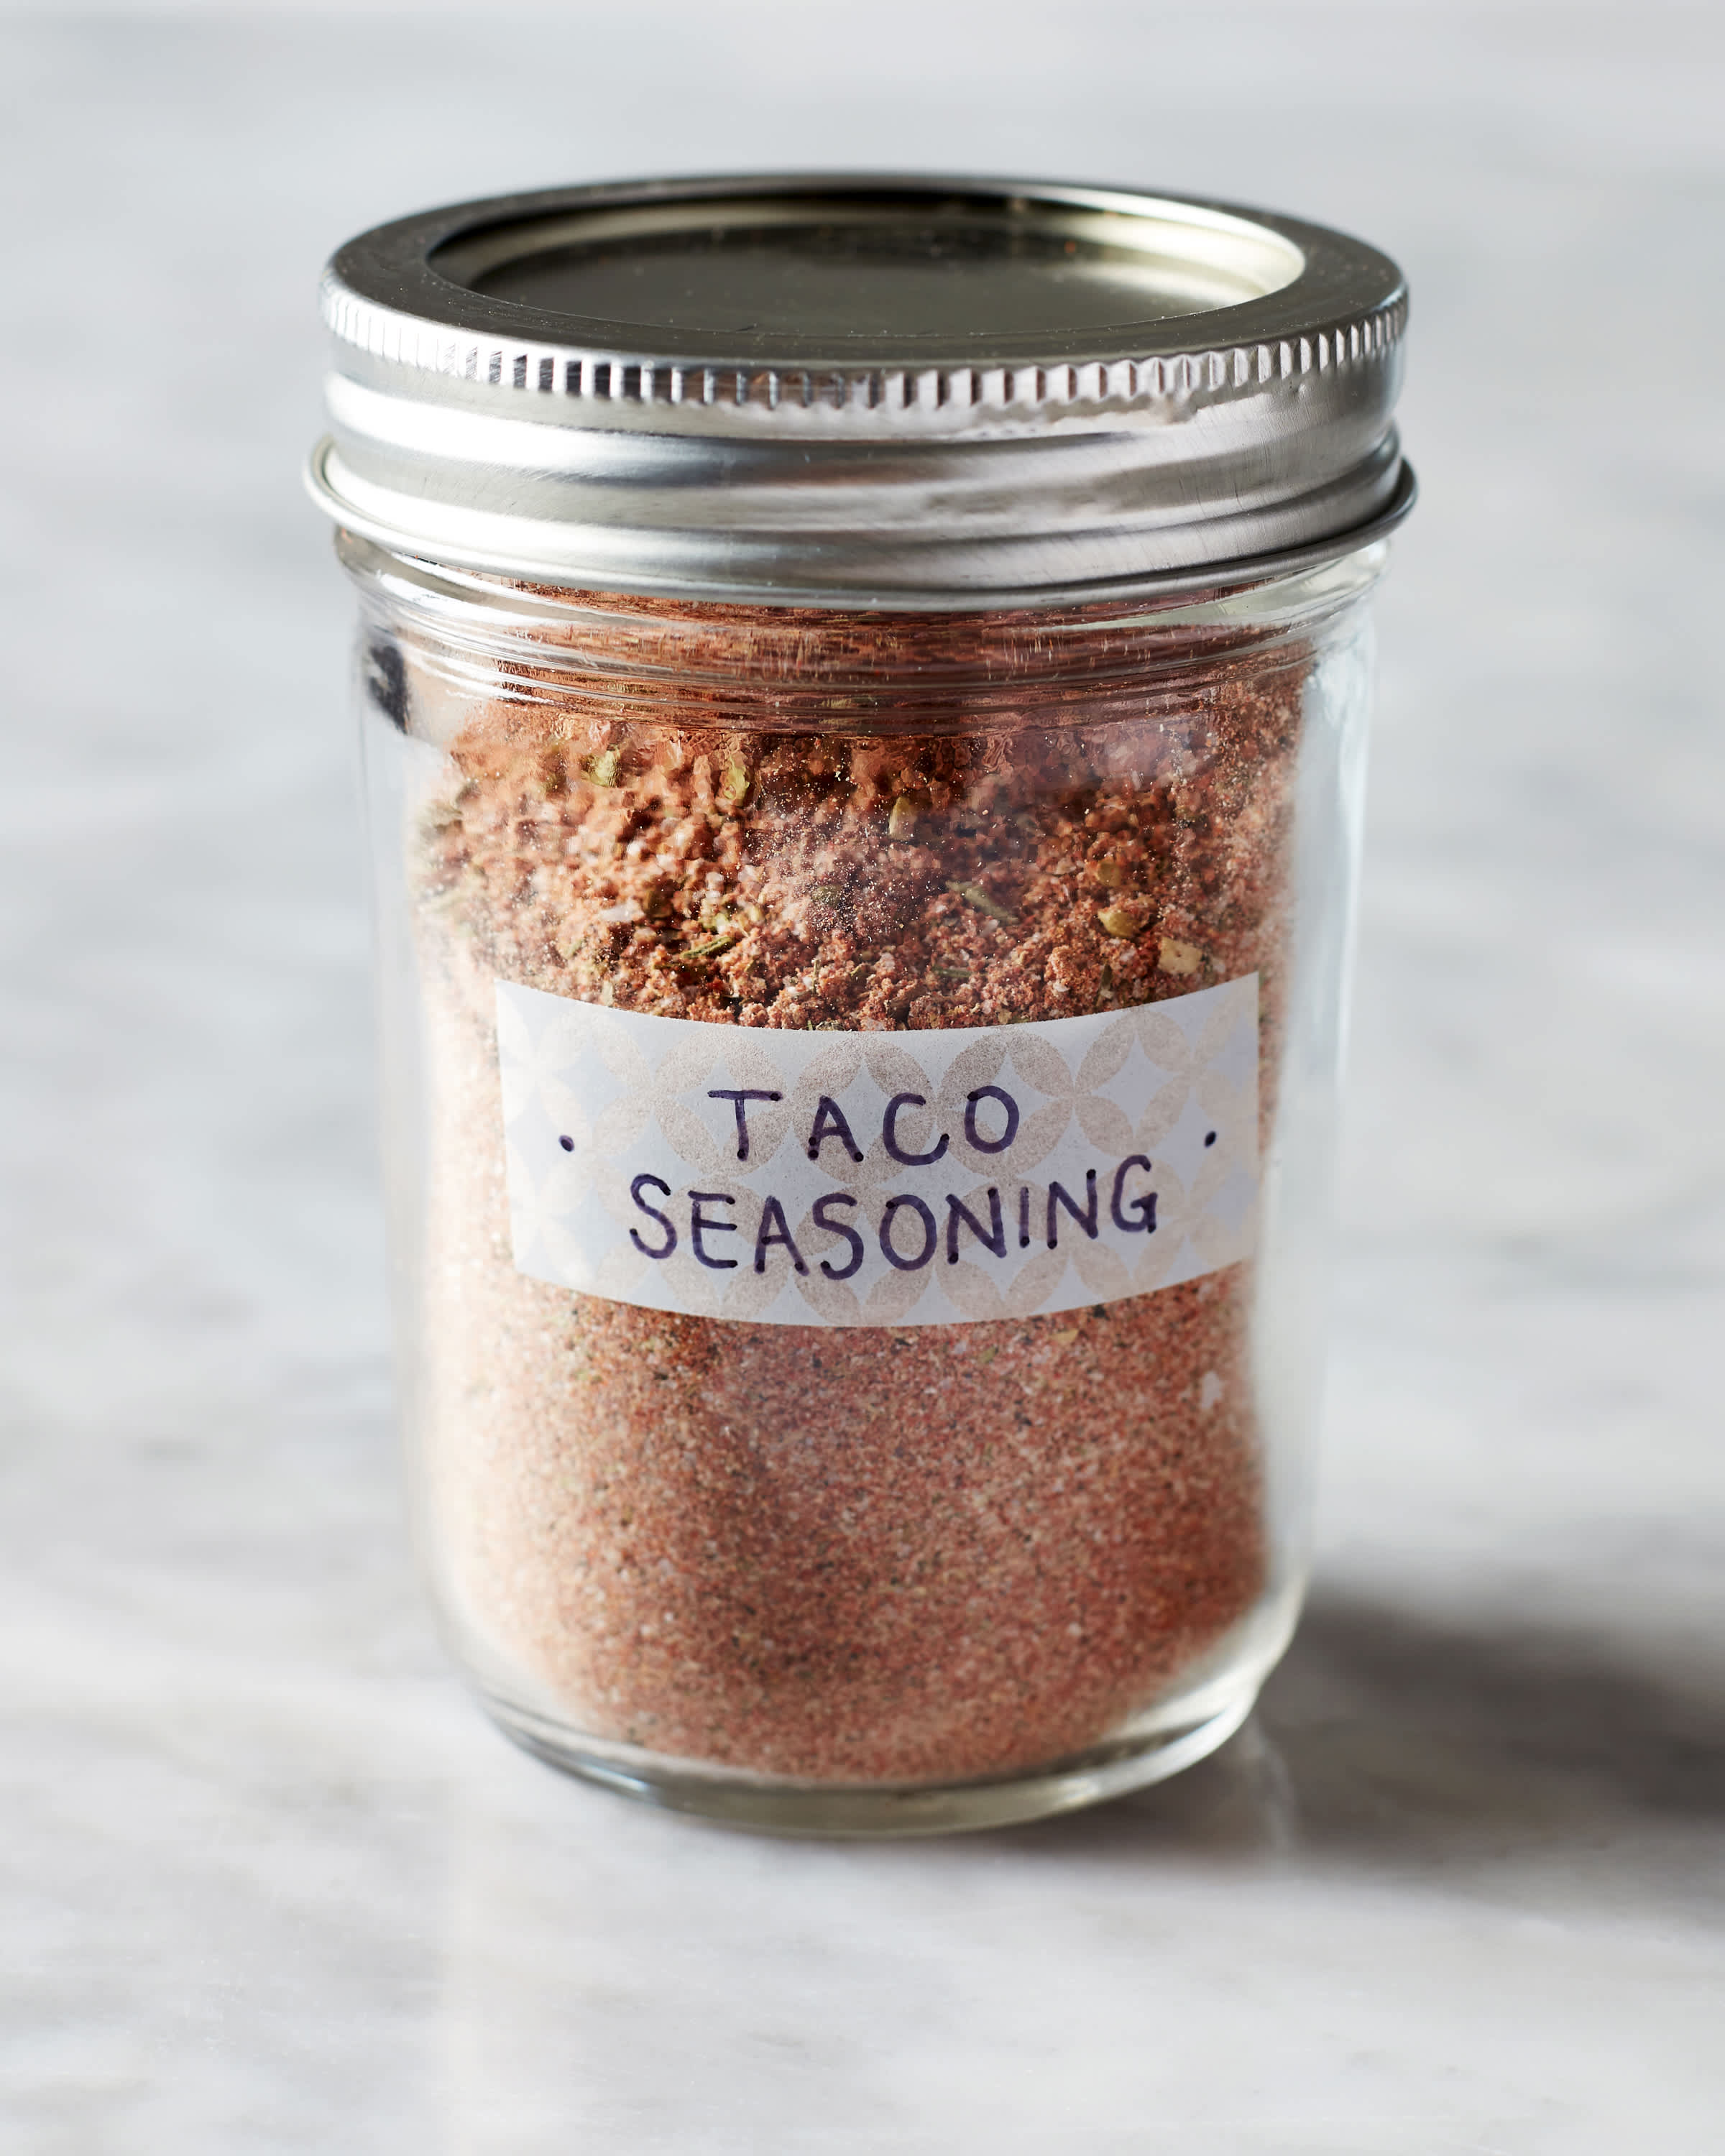 1-Minute Gluten Free Taco Seasoning